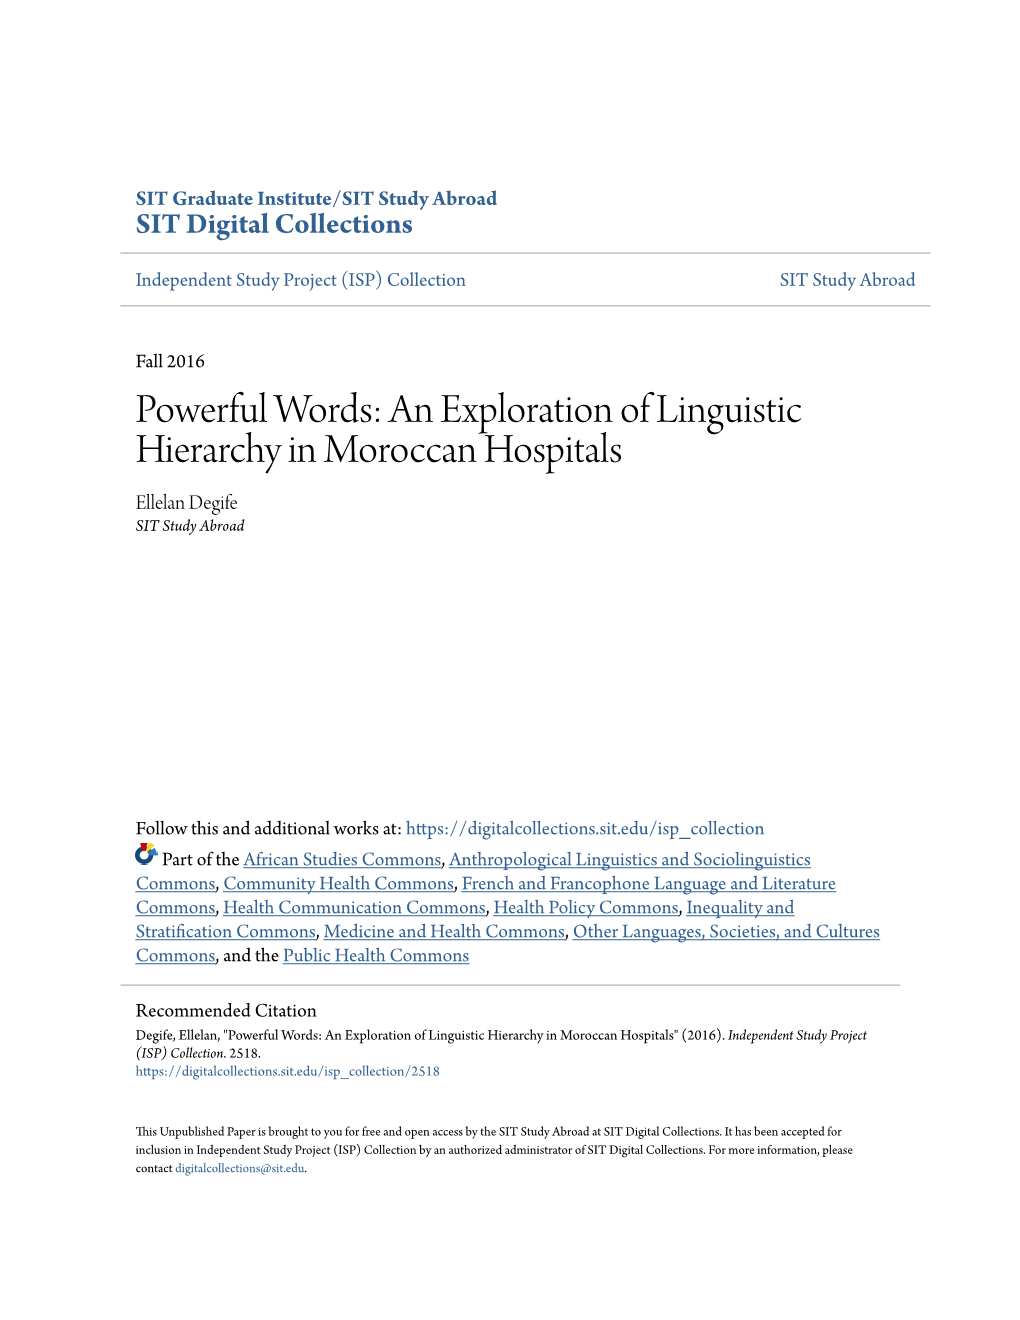 An Exploration of Linguistic Hierarchy in Moroccan Hospitals Ellelan Degife SIT Study Abroad